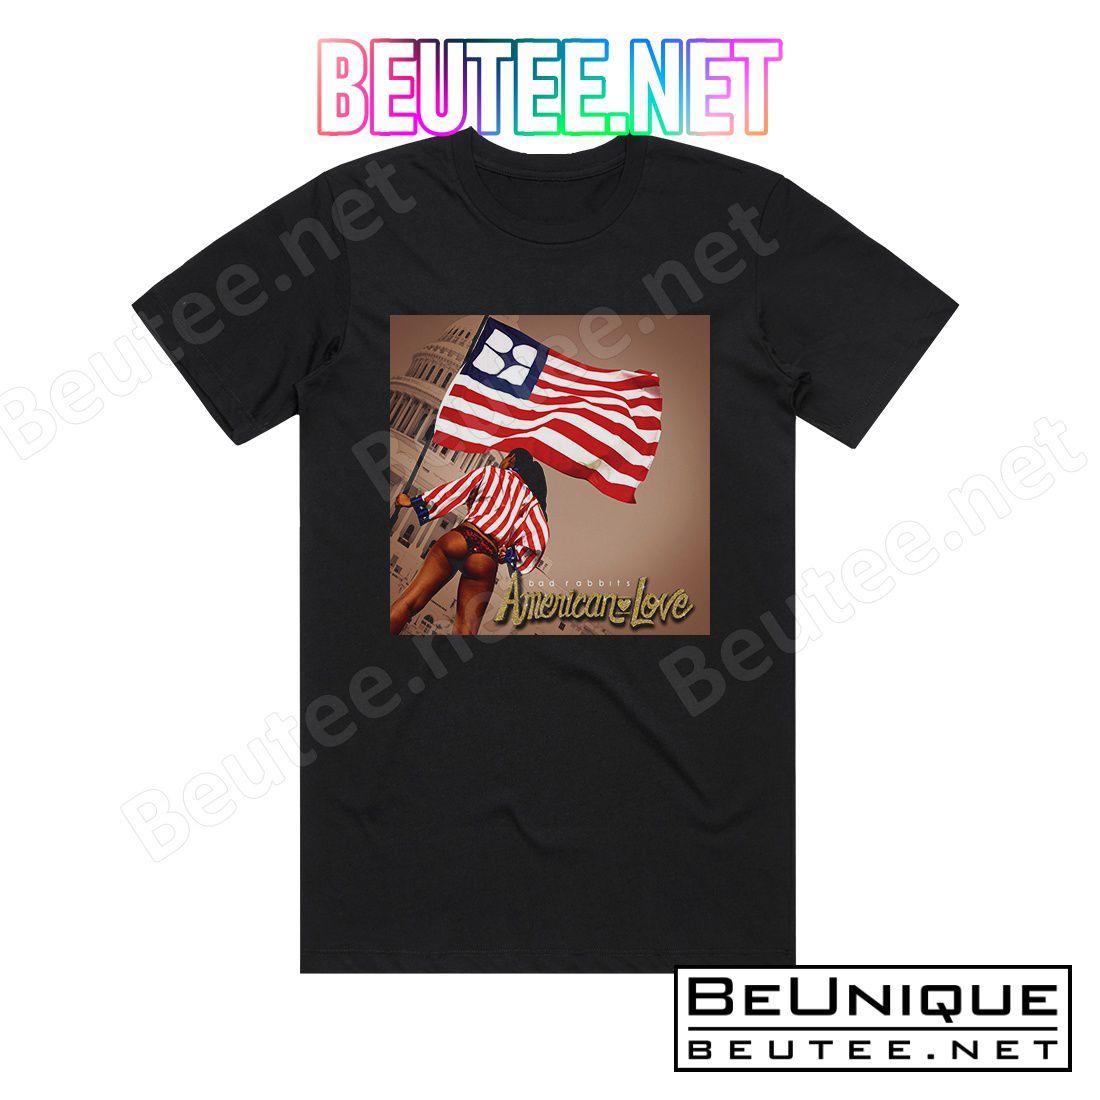 Bad Rabbits American Love Album Cover T-Shirt